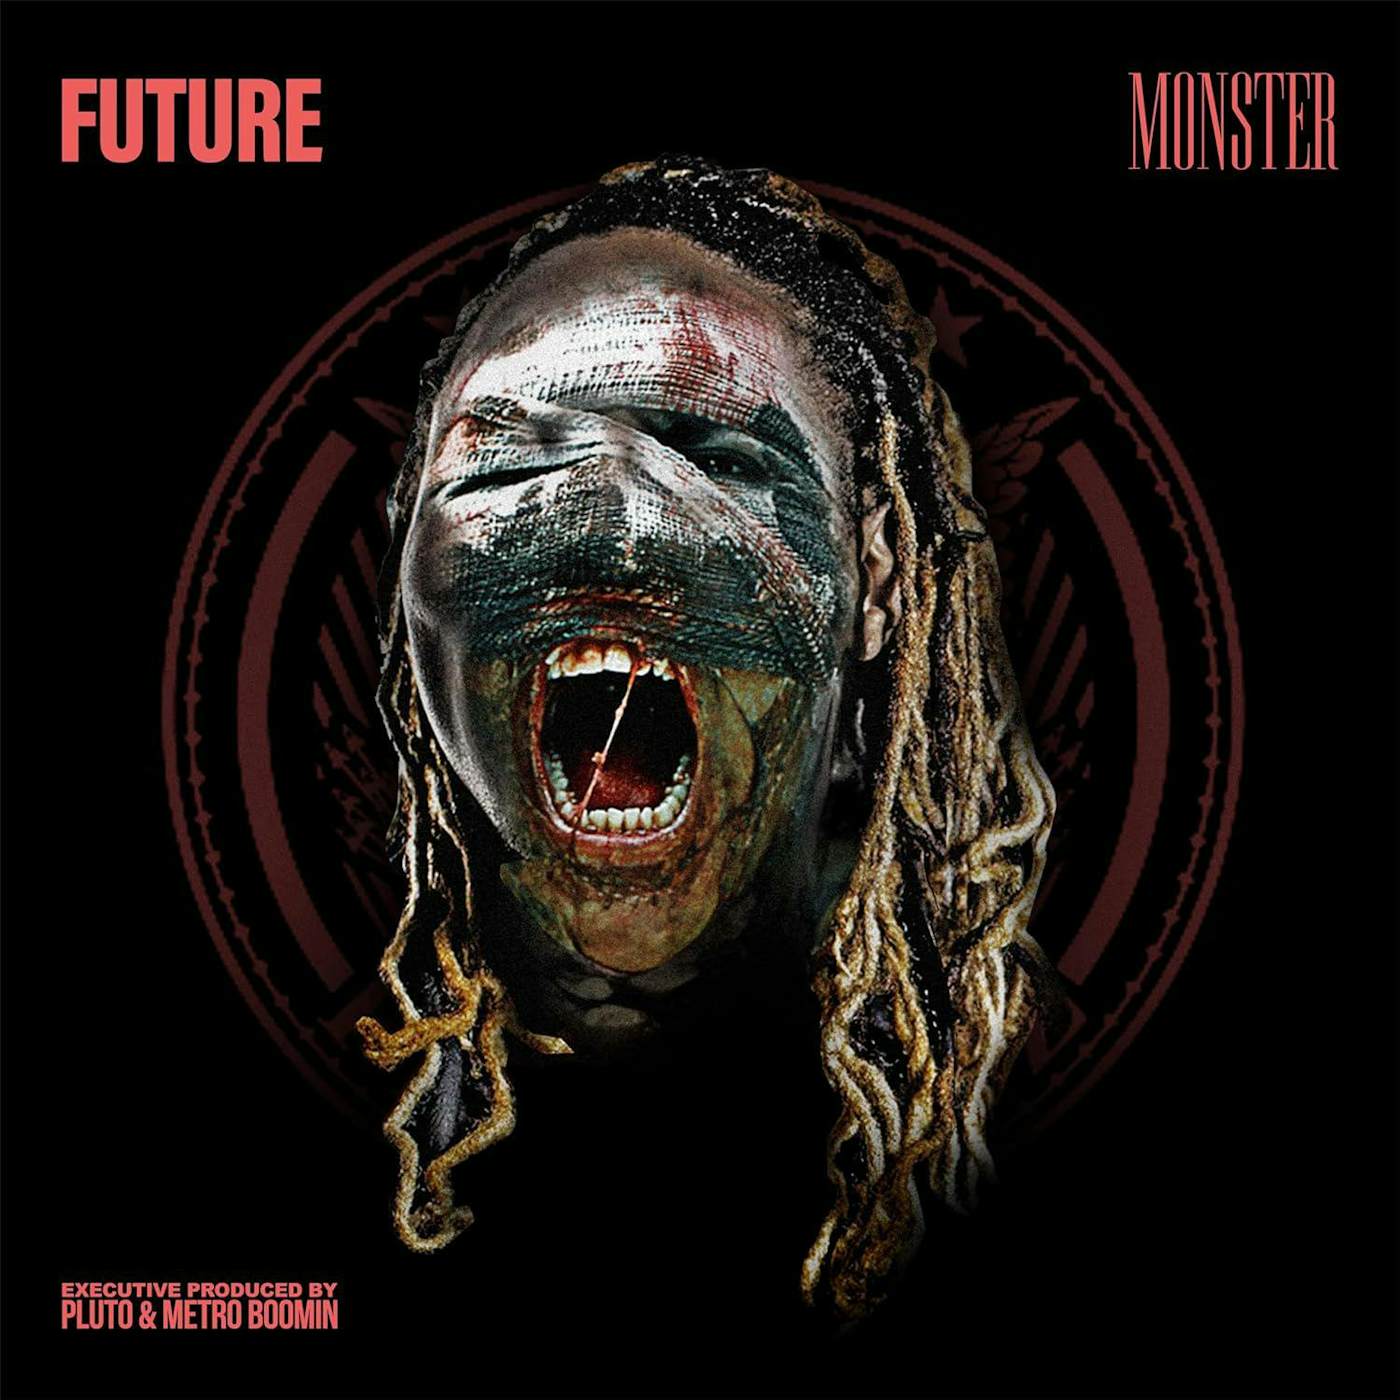 Future Monster Vinyl Record